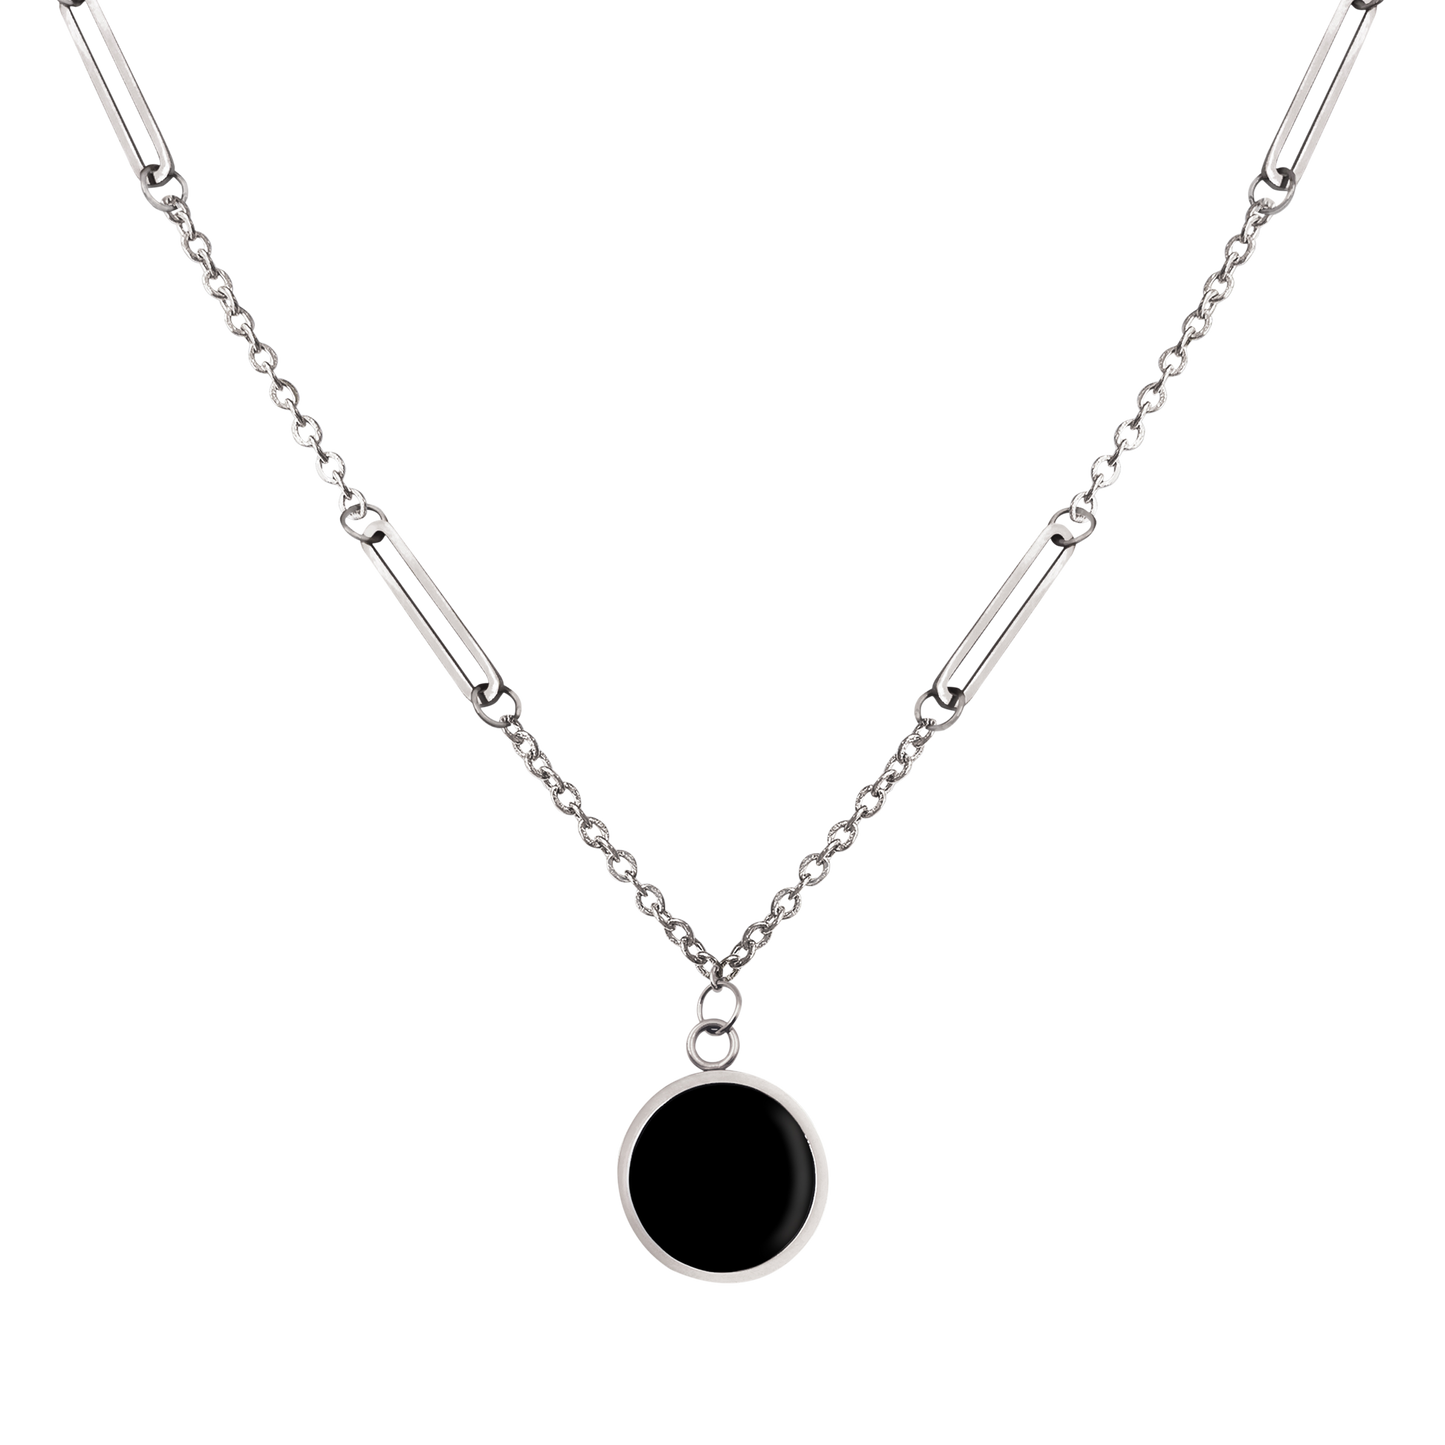 Cibola Necklace Silver